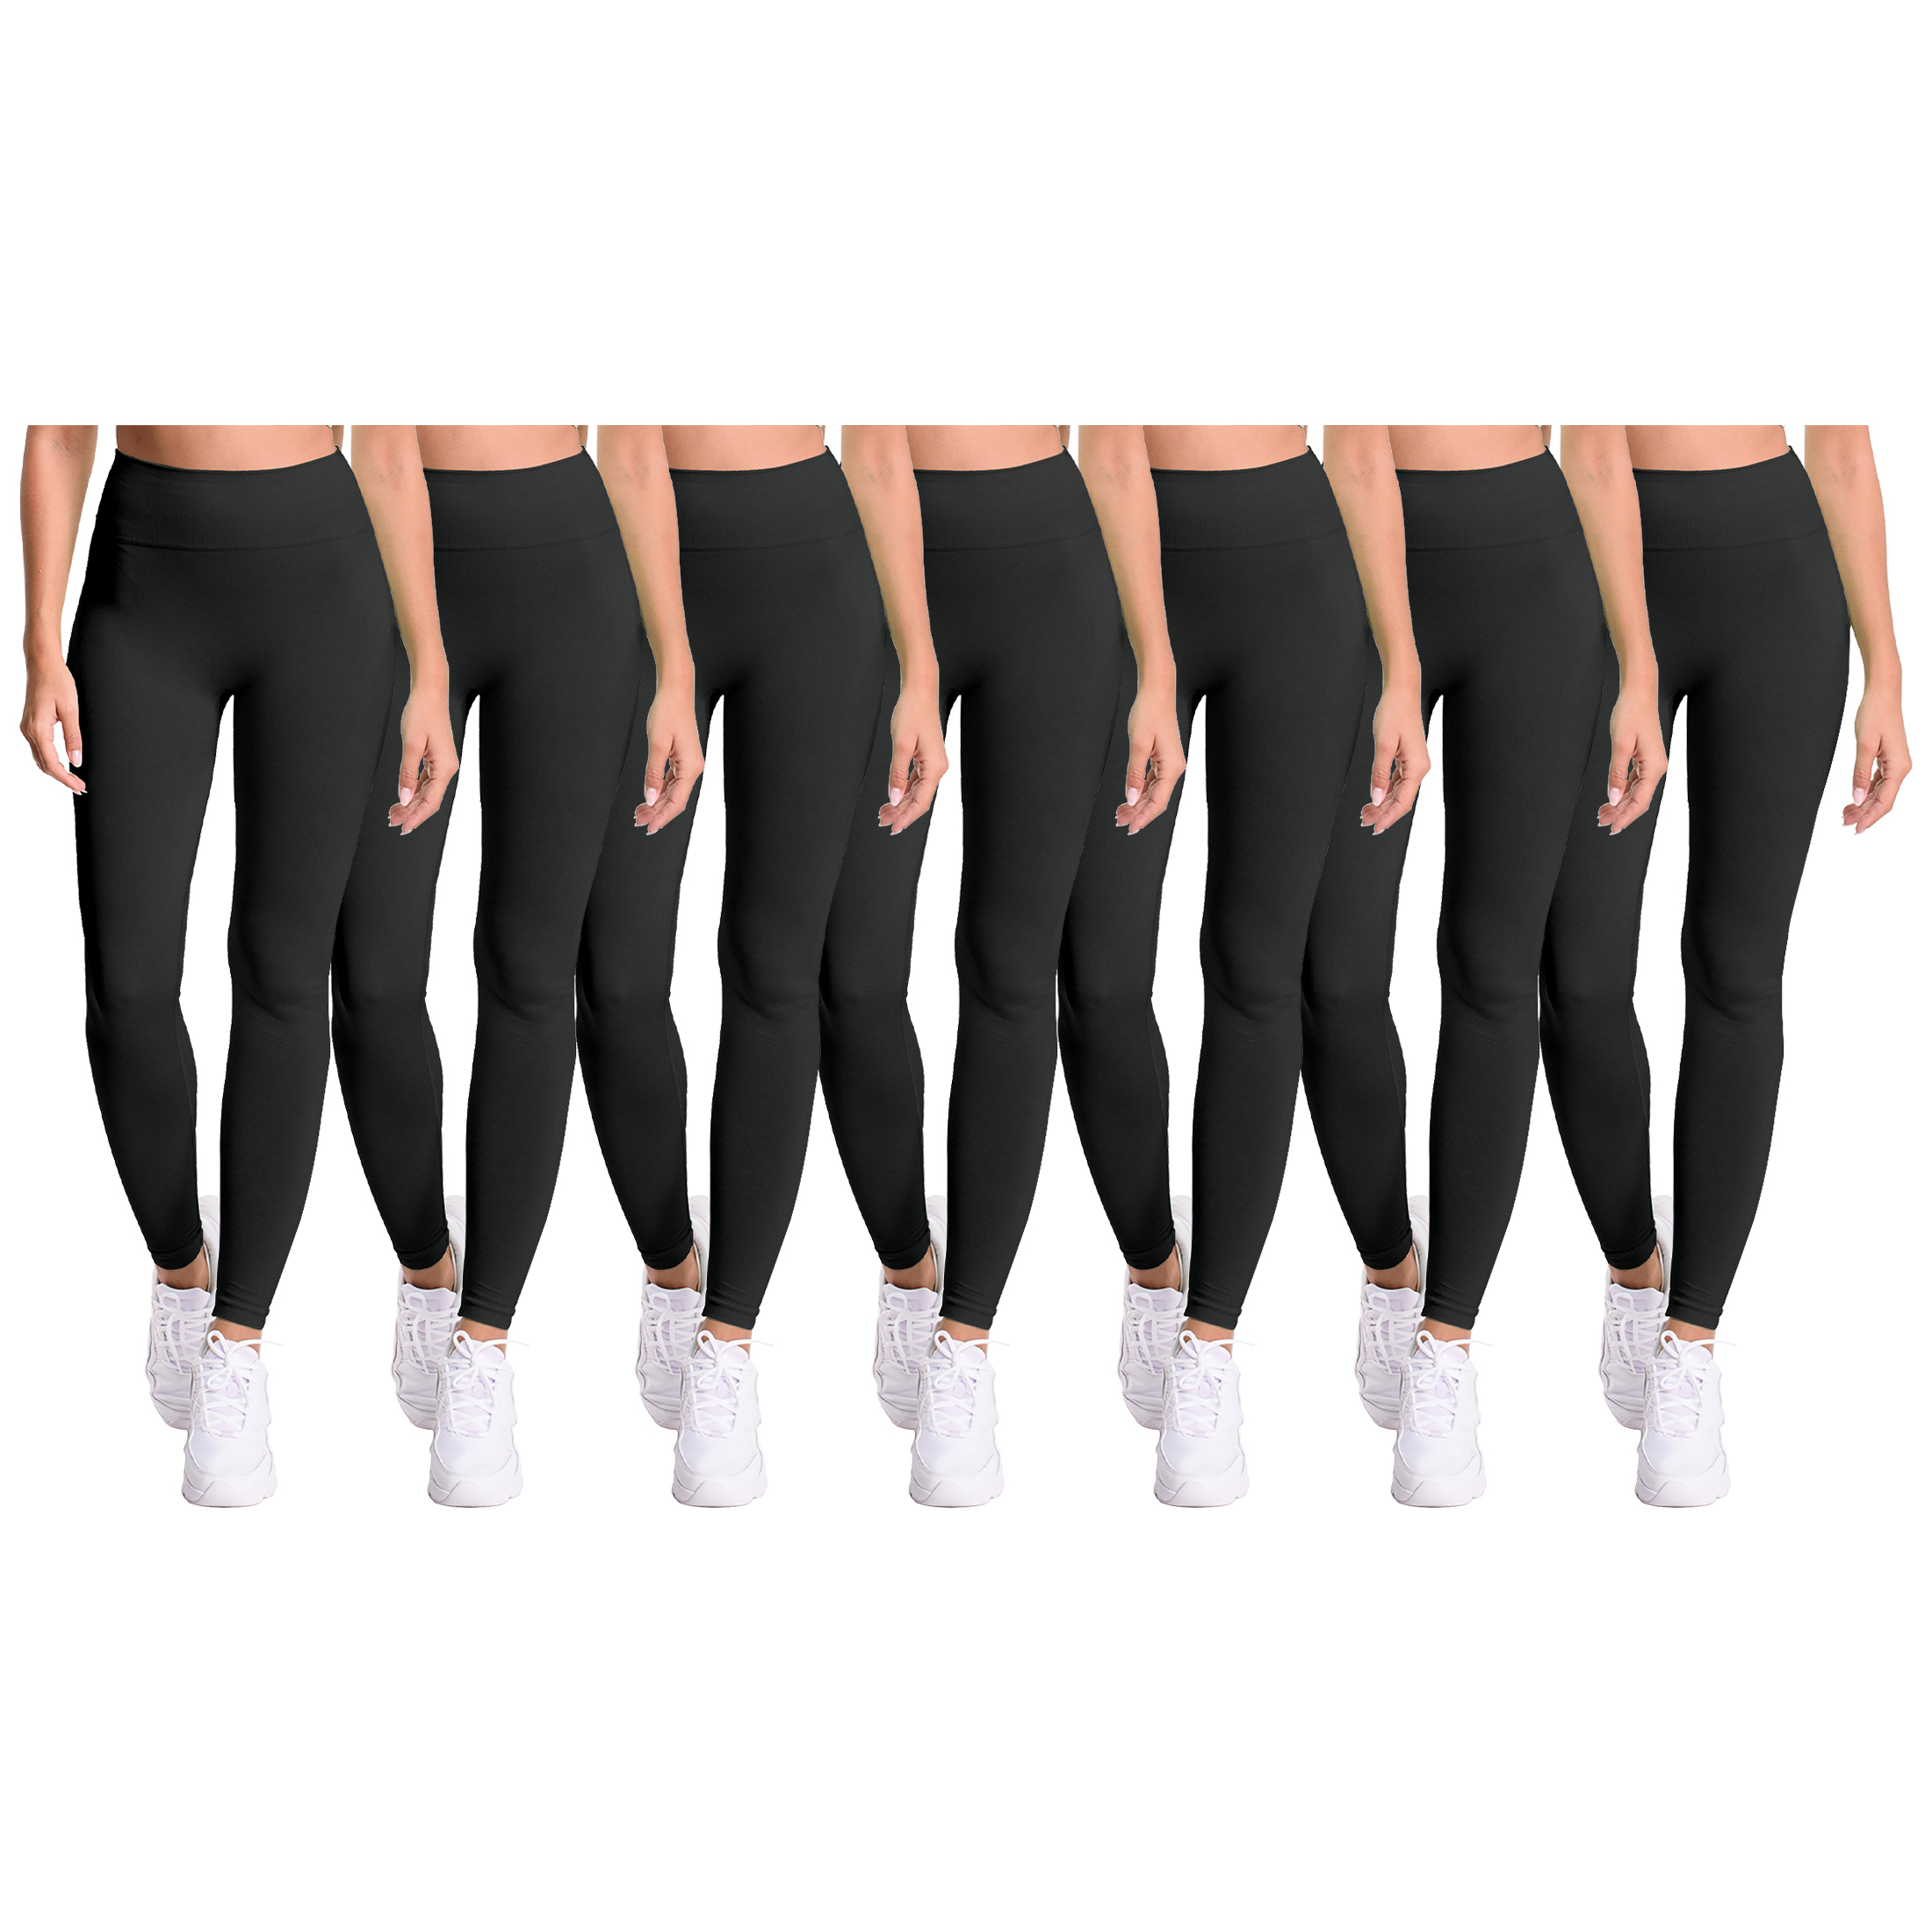 6-Pack: Women's Cozy Fleece-Lined Workout Yoga Pants Seamless Leggings - Assorted, Medium